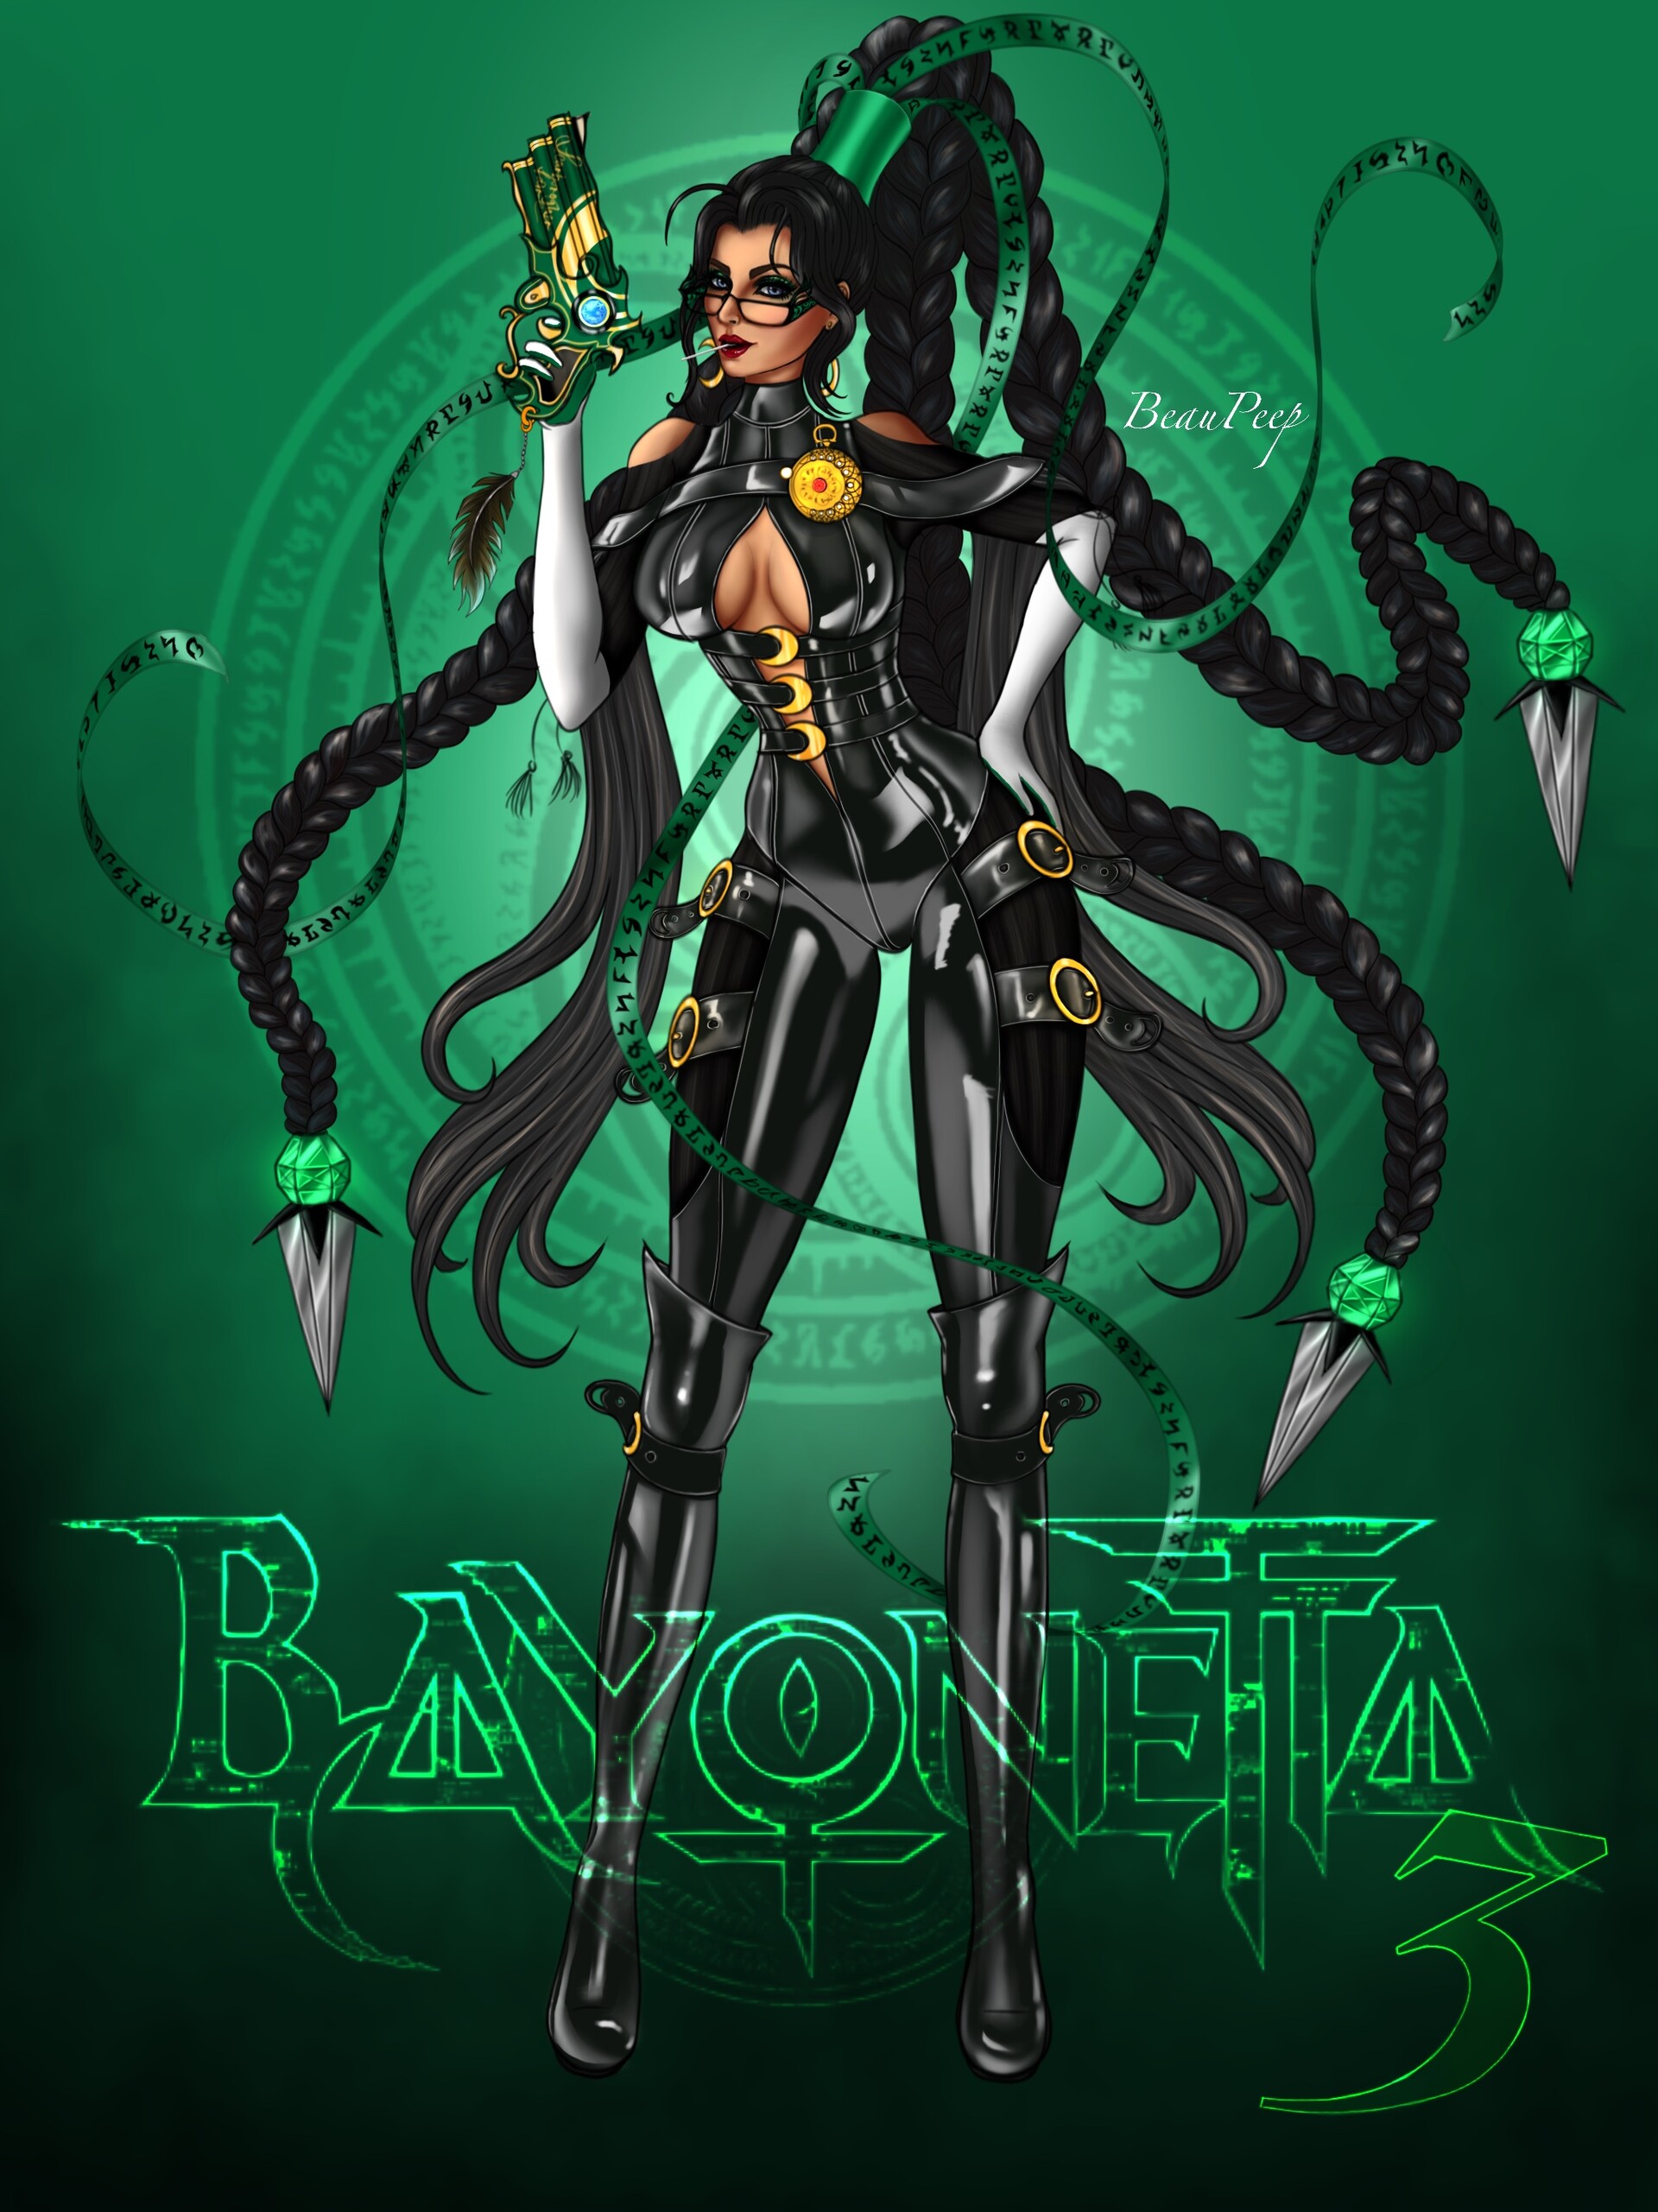 Lots of official Bayonetta 3 art